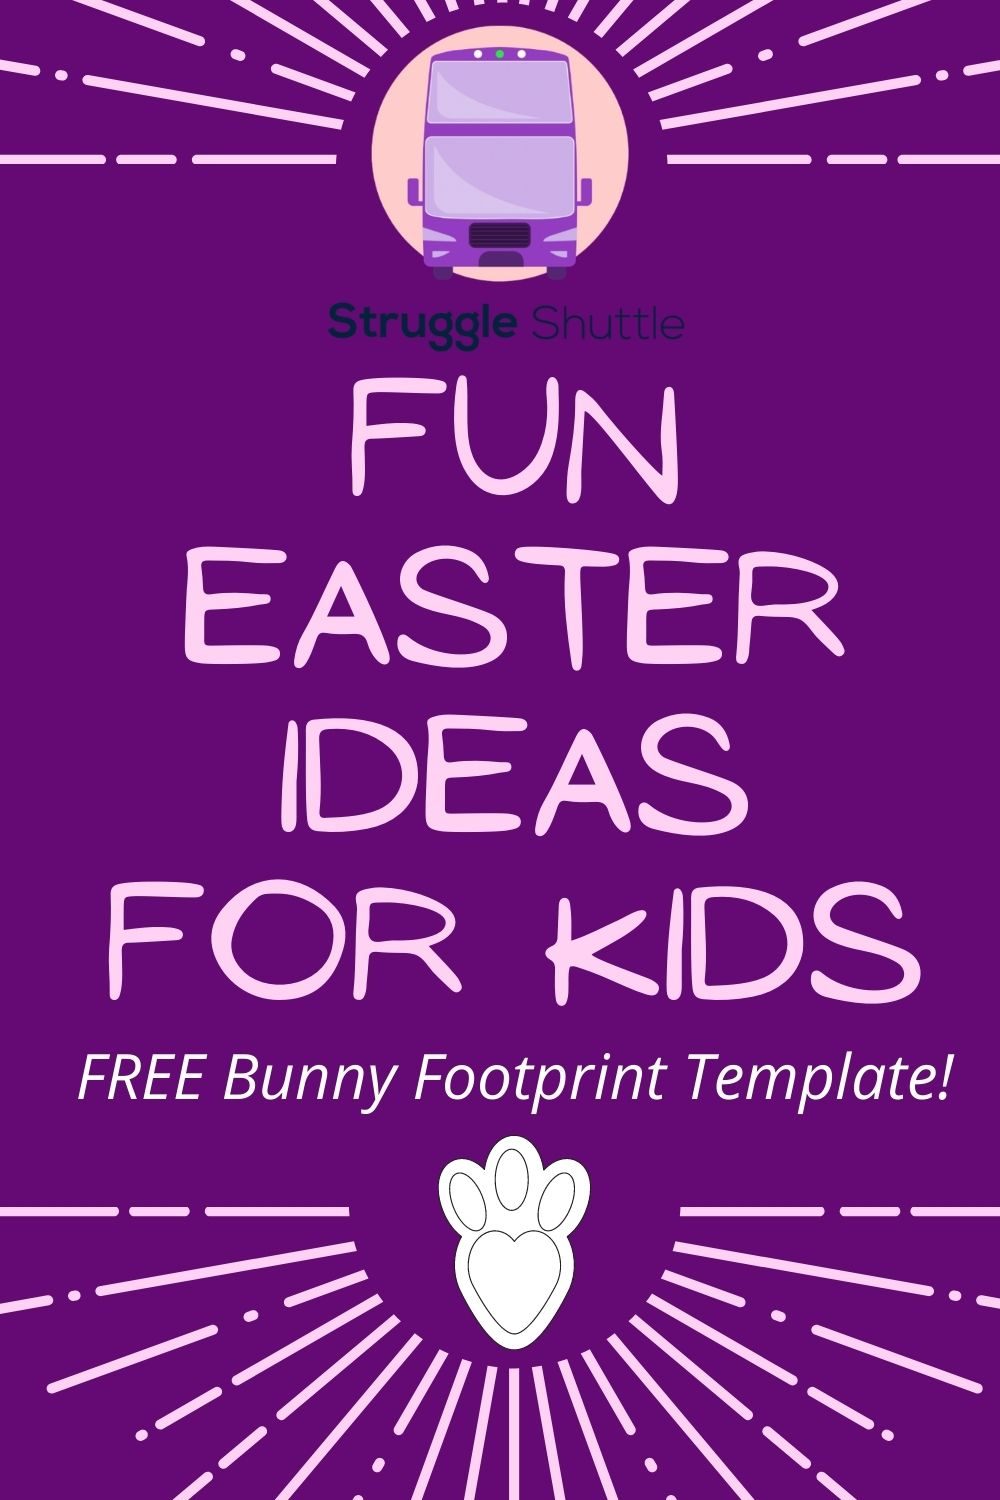 bunny footprint template